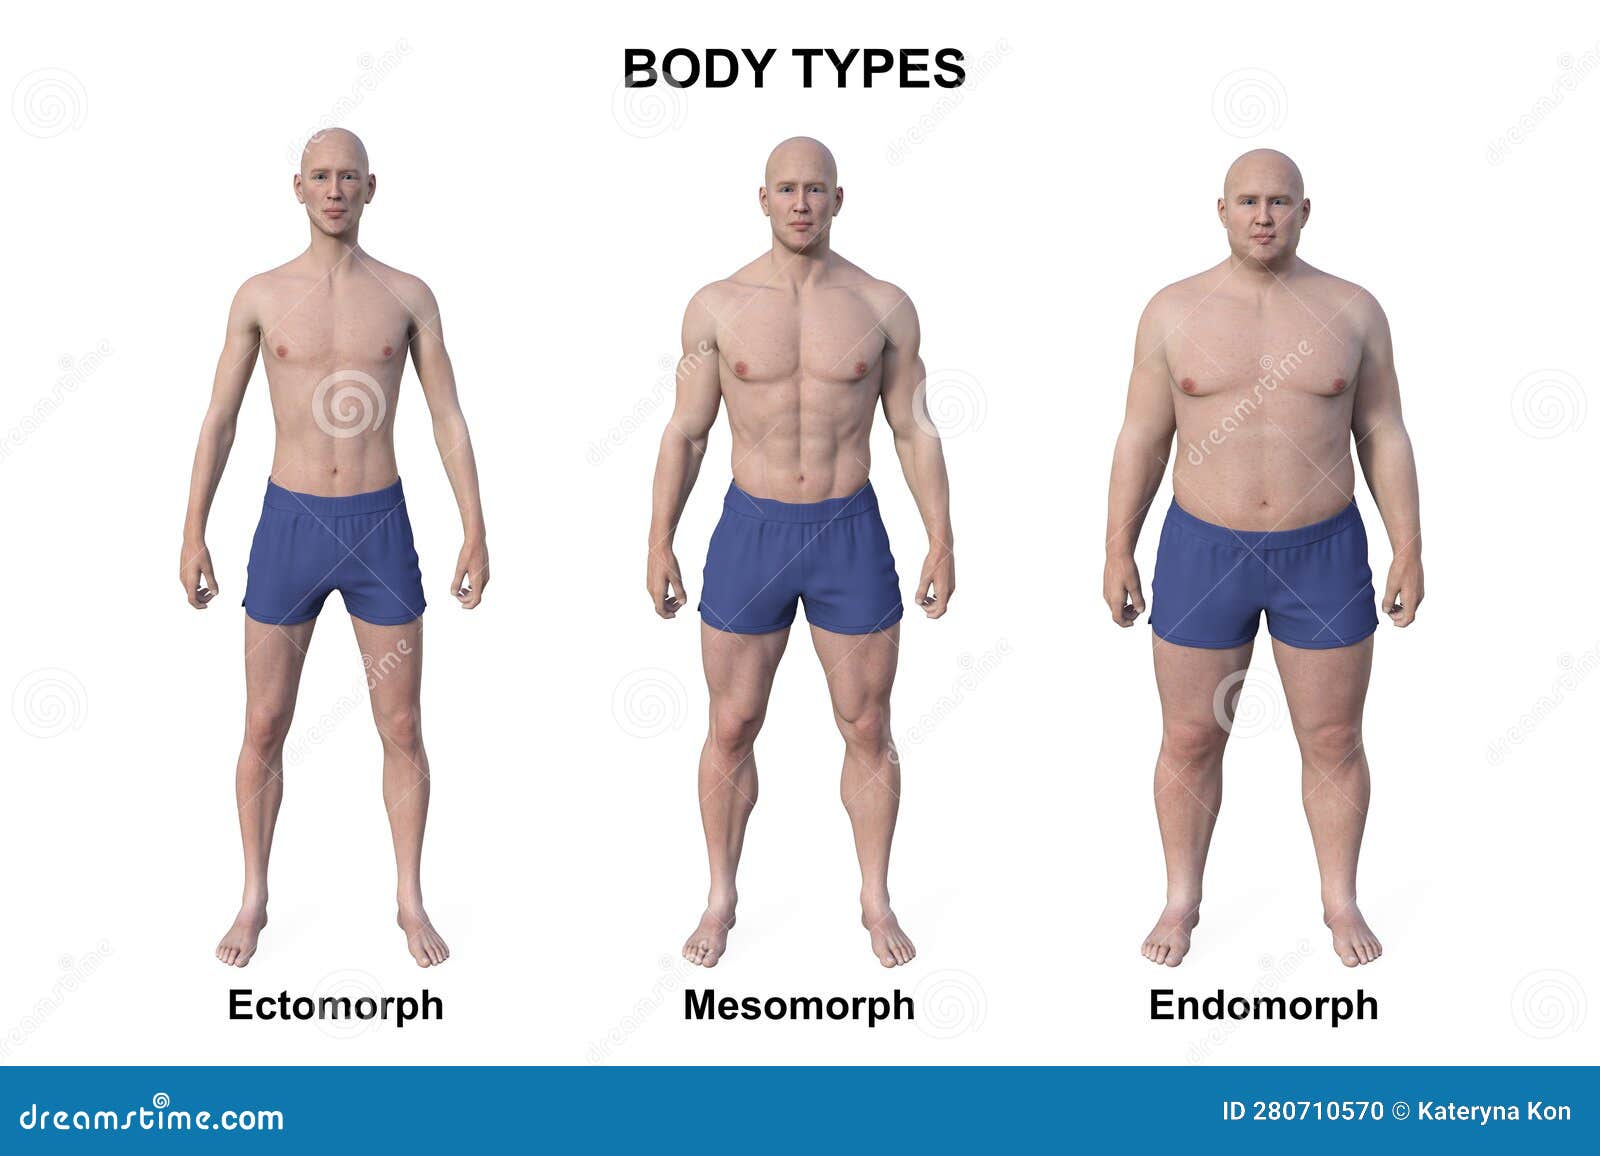 What is the science behind the ectomorph, mesomorph and endomorph